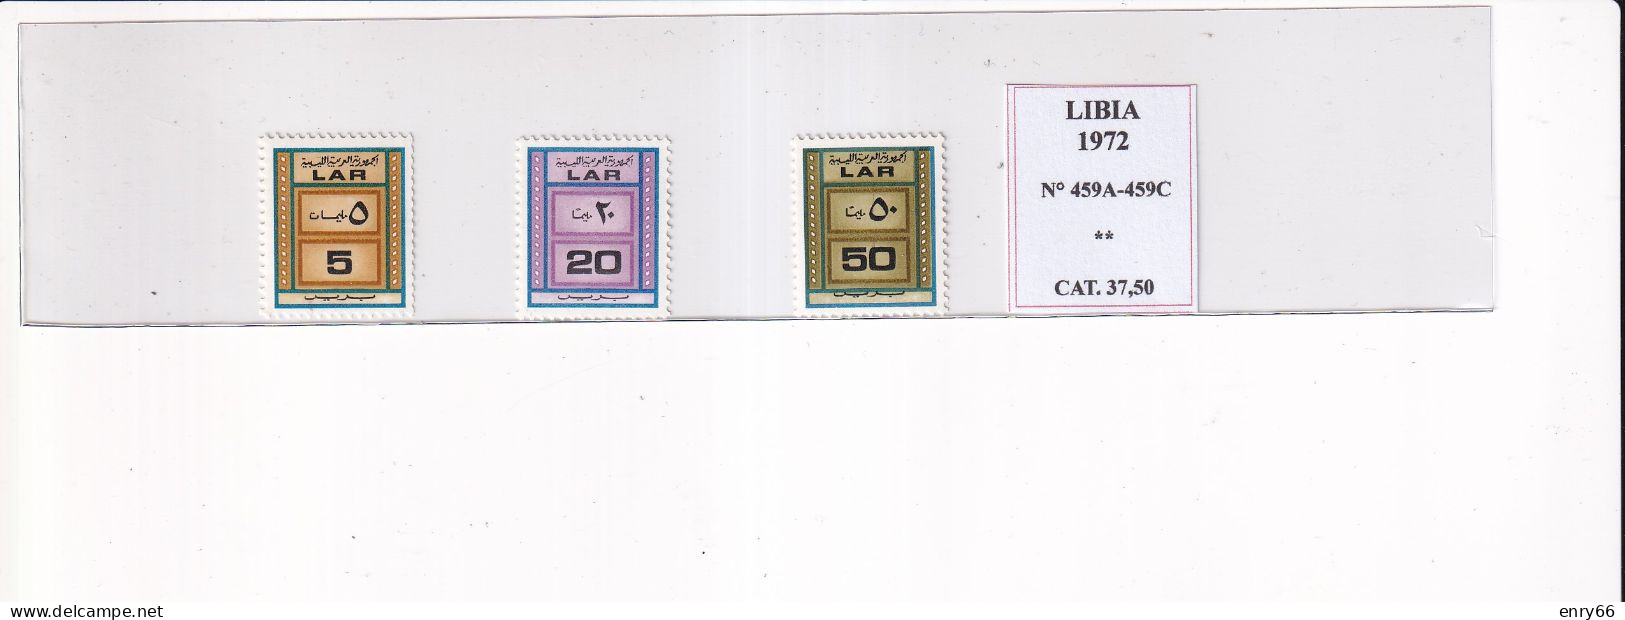 LIBIA 1972 N°459A-459C MNH - Libia